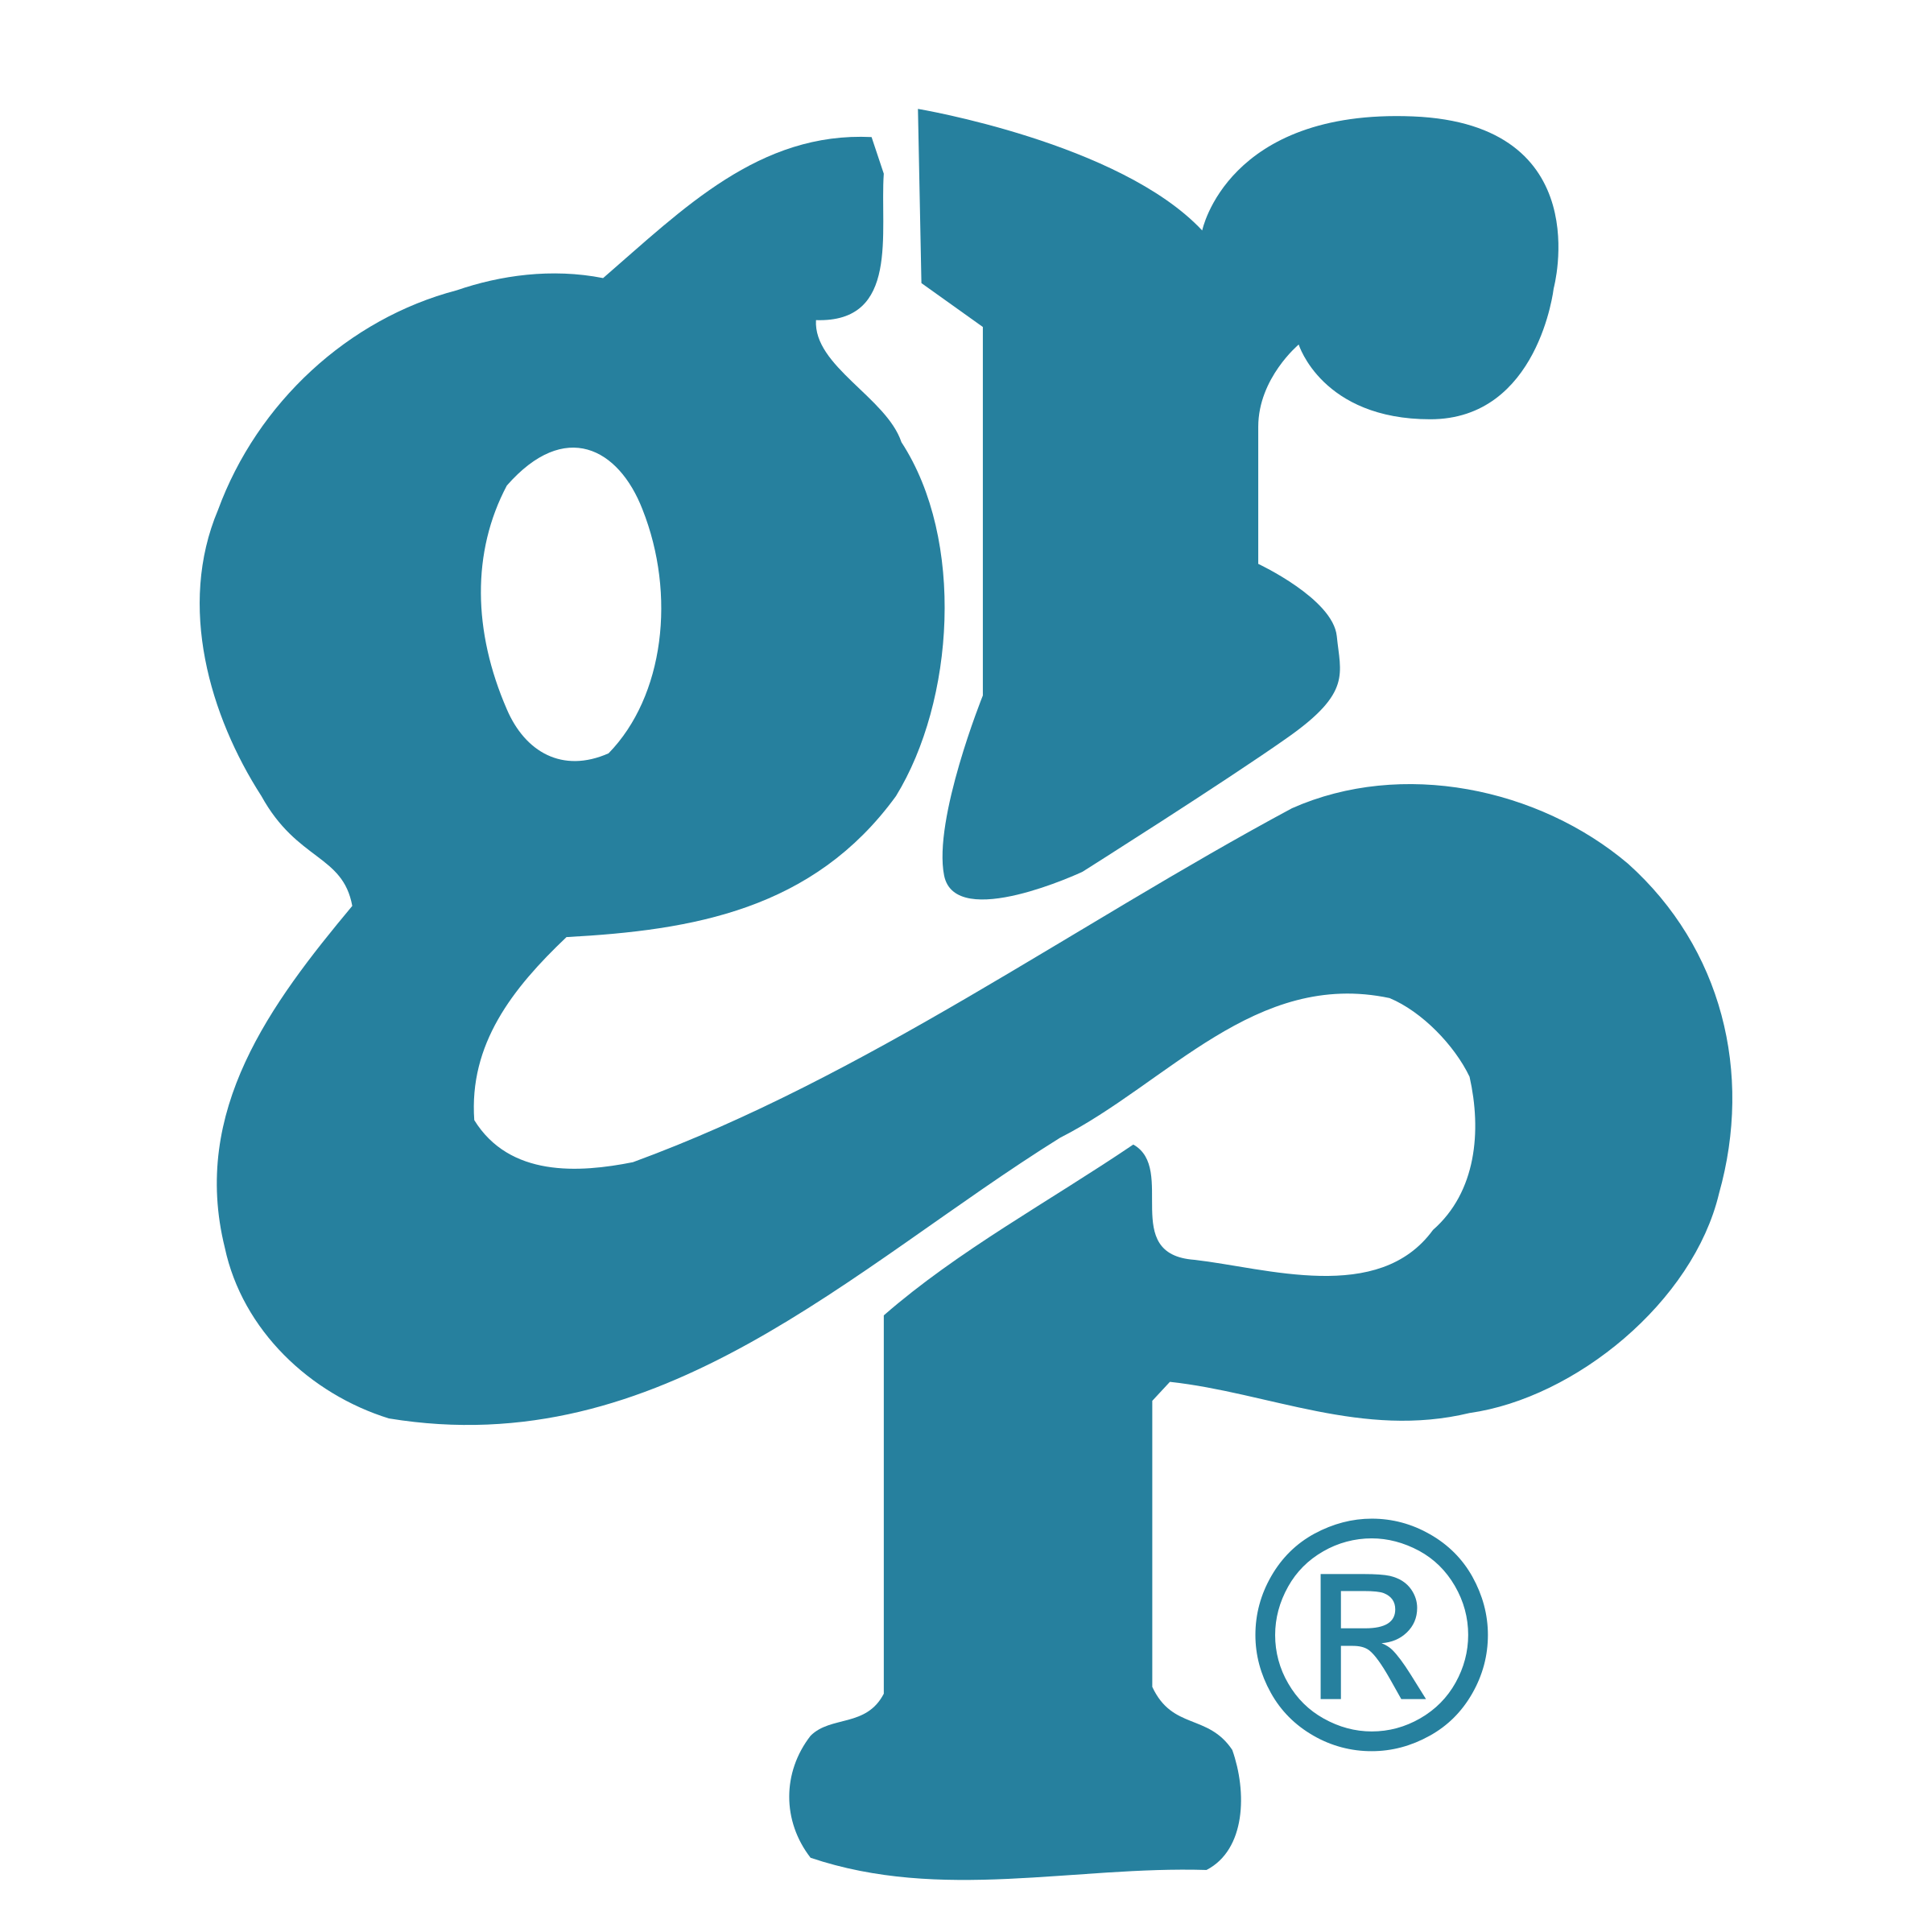 GRP Logo - GRP Logo PNG Transparent & SVG Vector - Freebie Supply